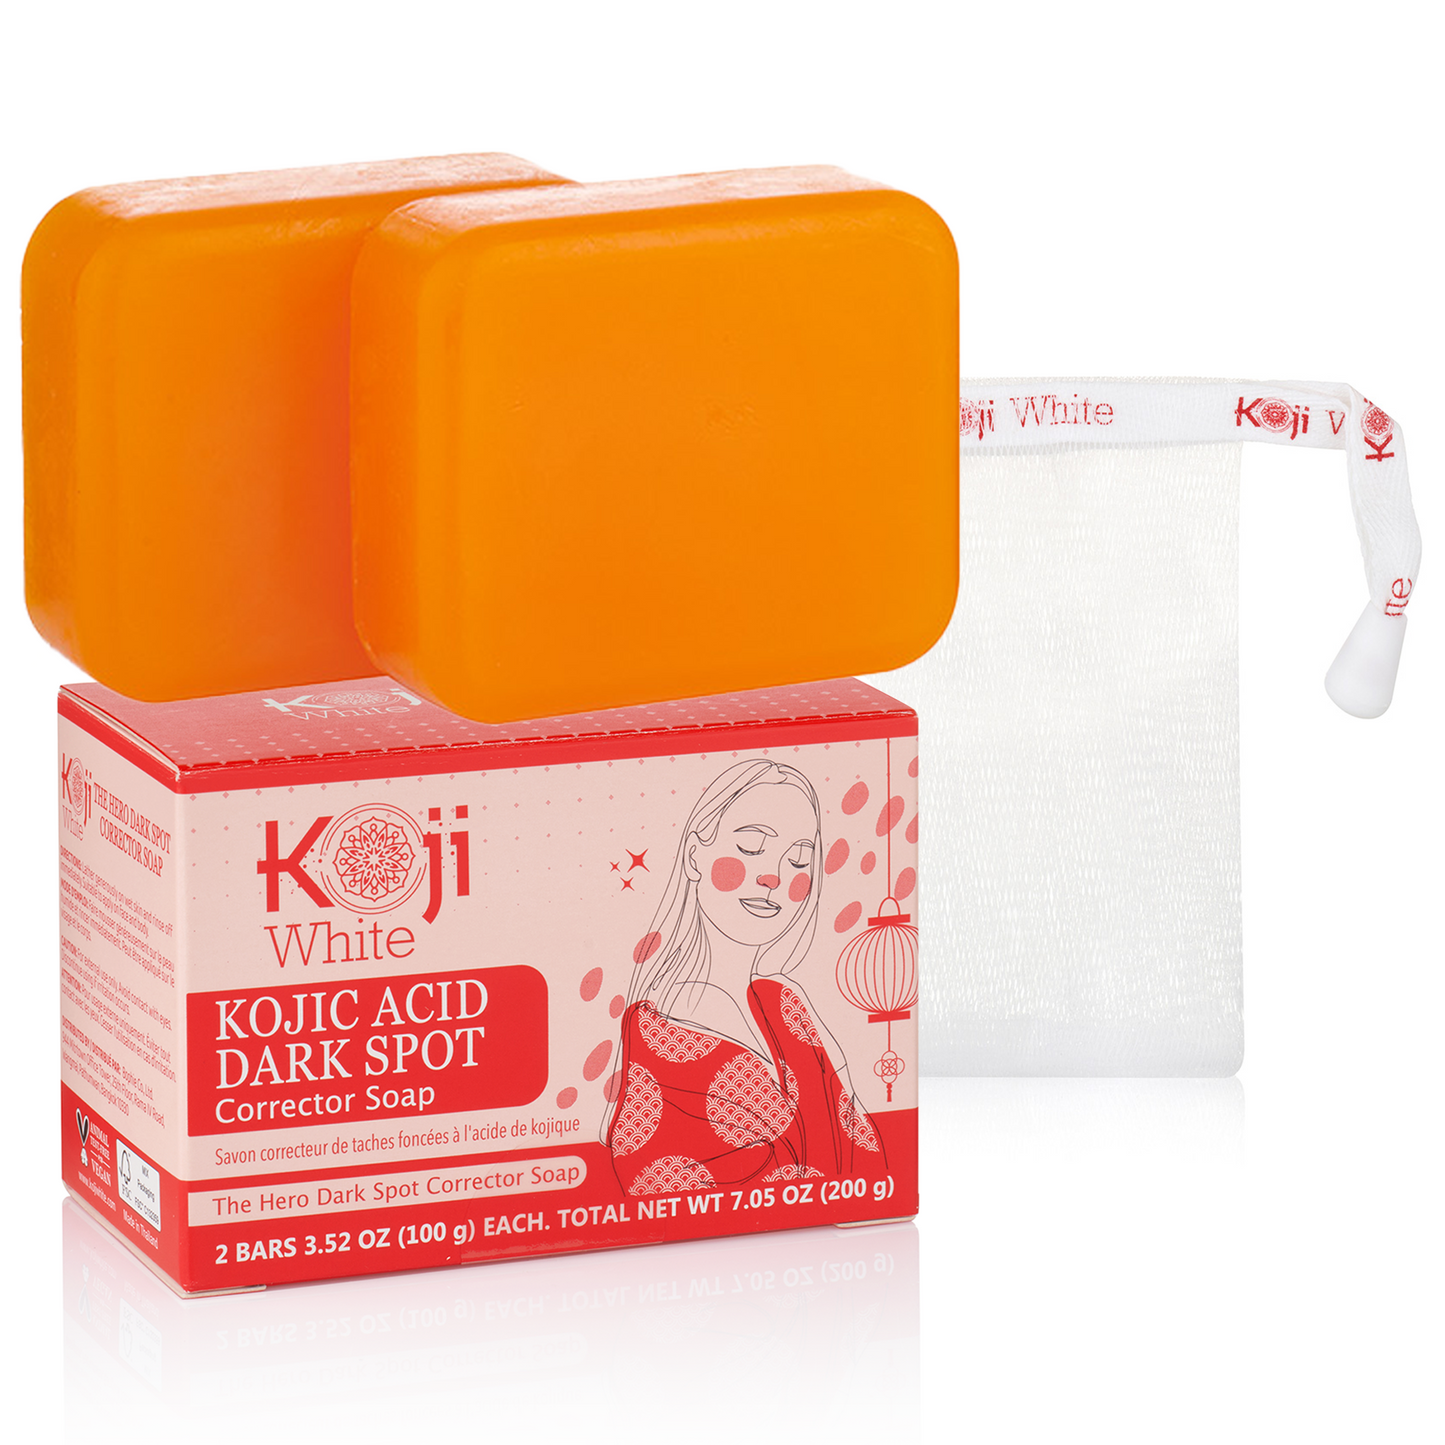 Koji White Kojic Acid Dark Spot Corrector Soap (2Bars)